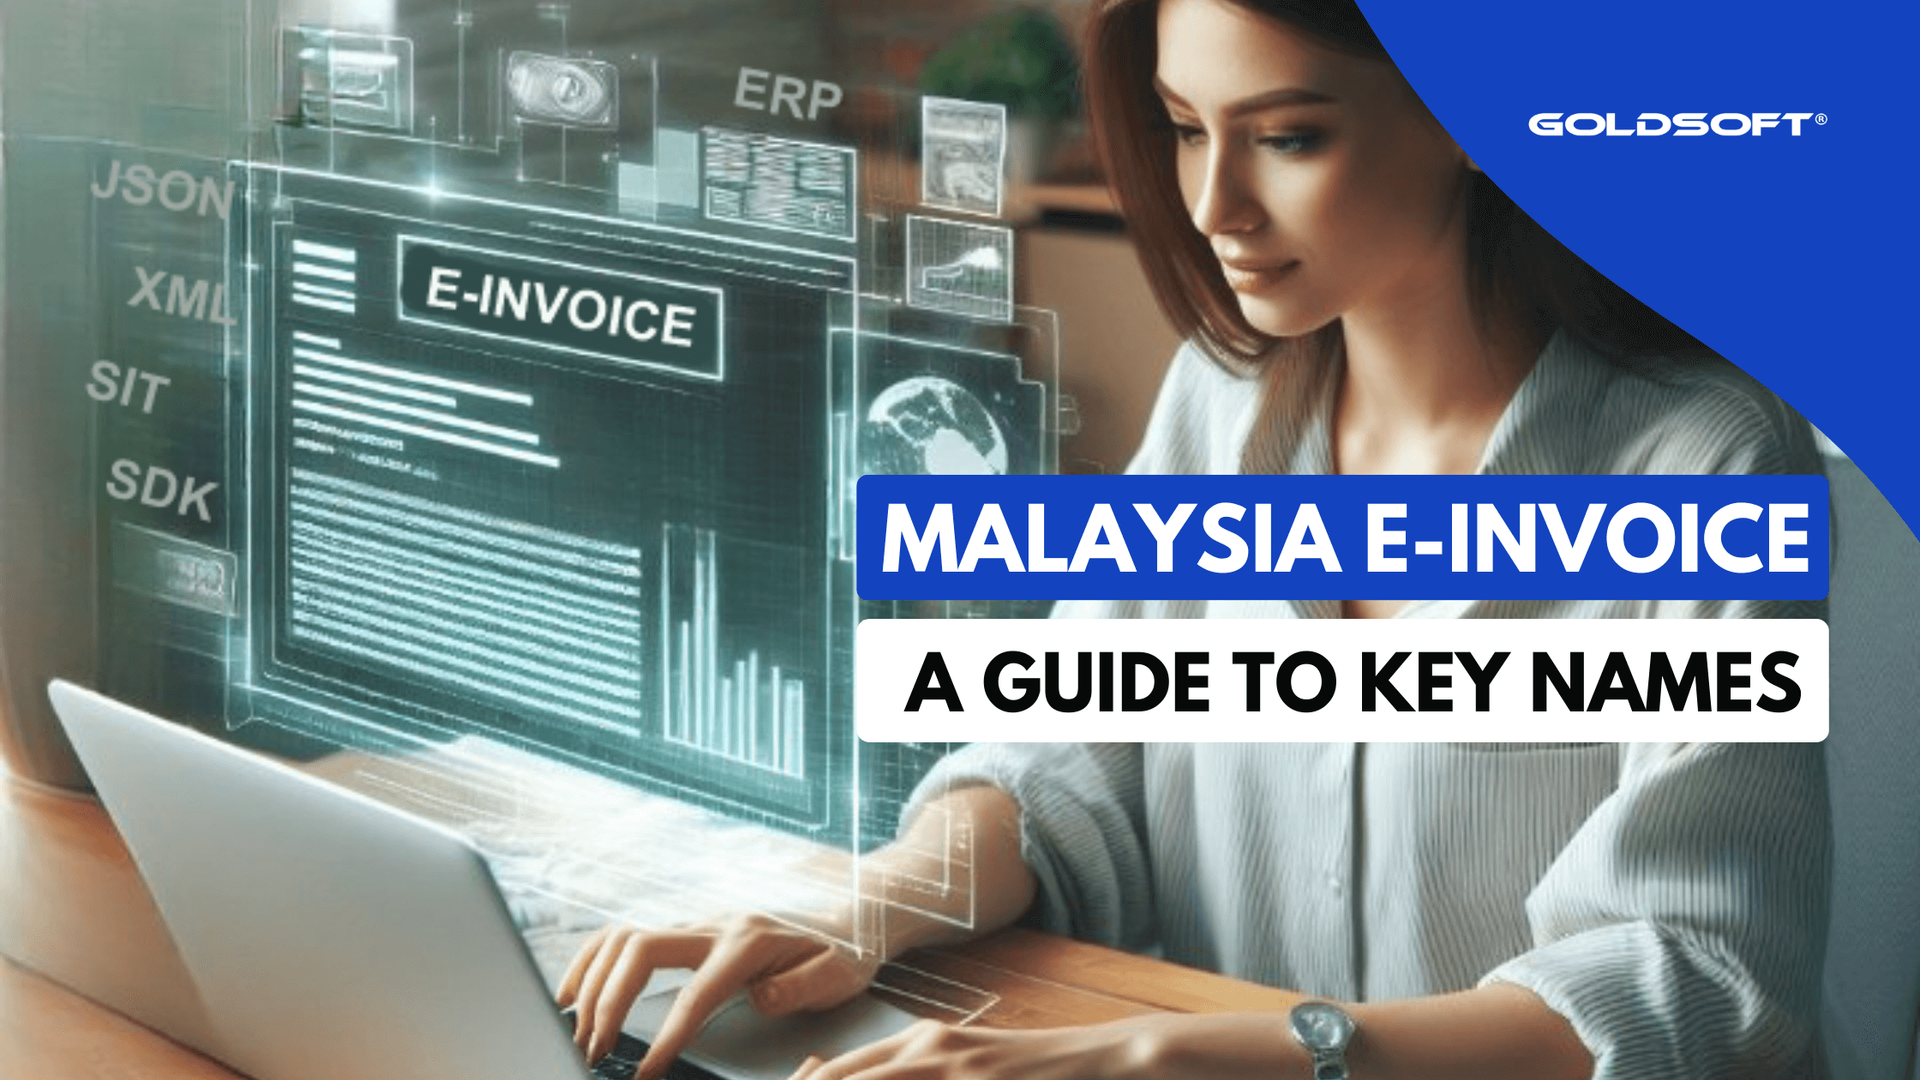 Understanding Malaysia e-invoice key names e.g. ERP, SDK, SIT, API and more.